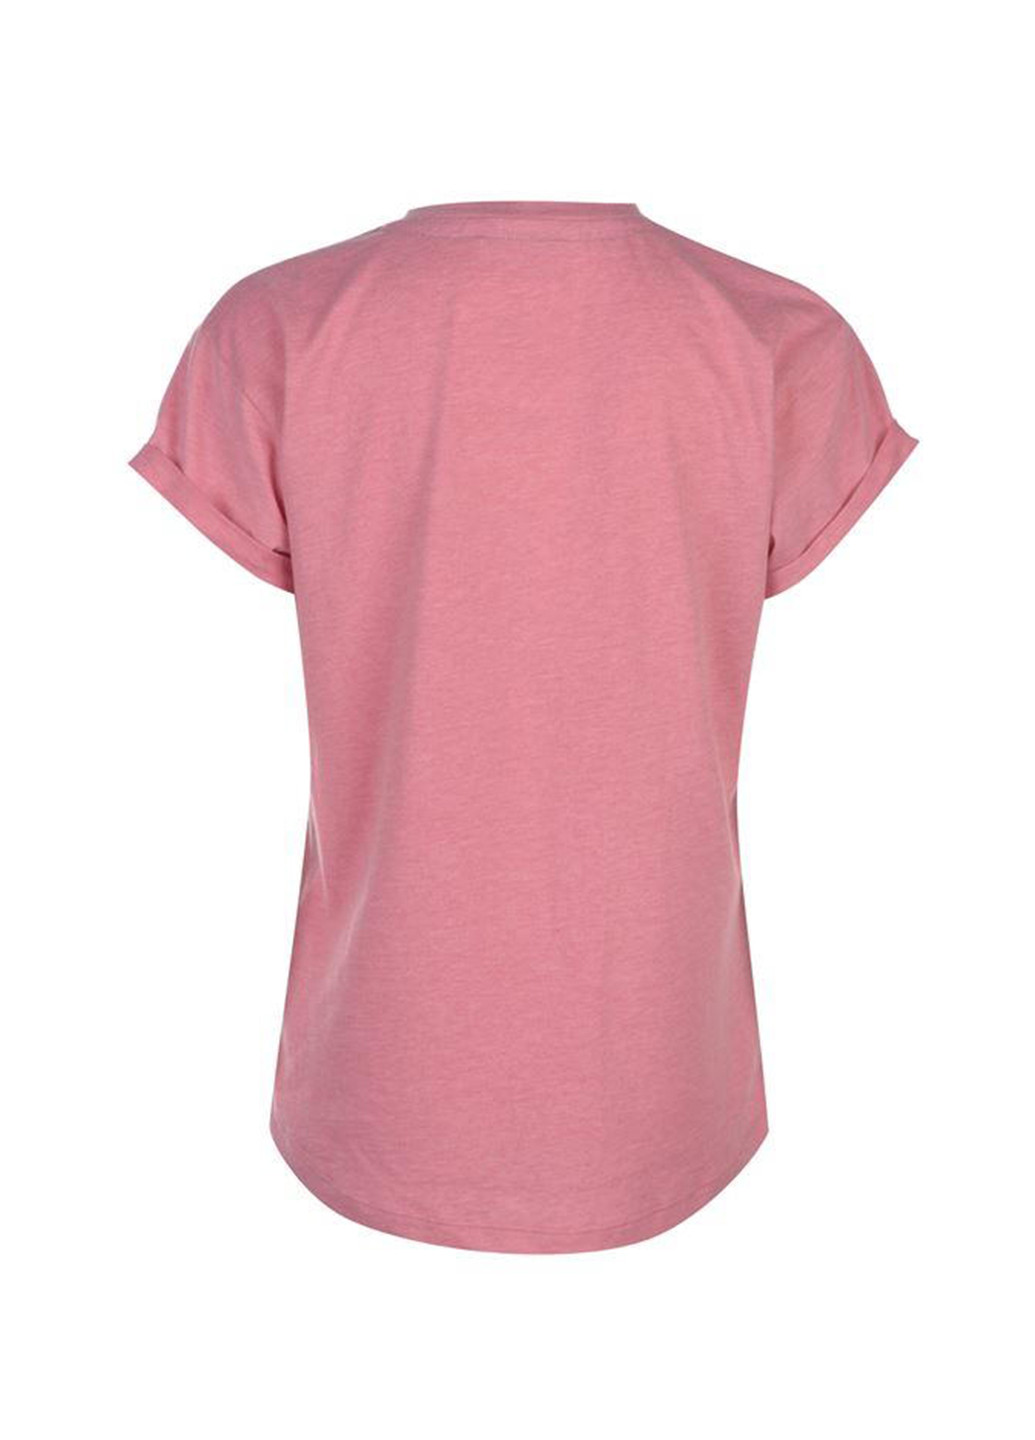 Рожево-коричнева літня футболка Soulcal & Co